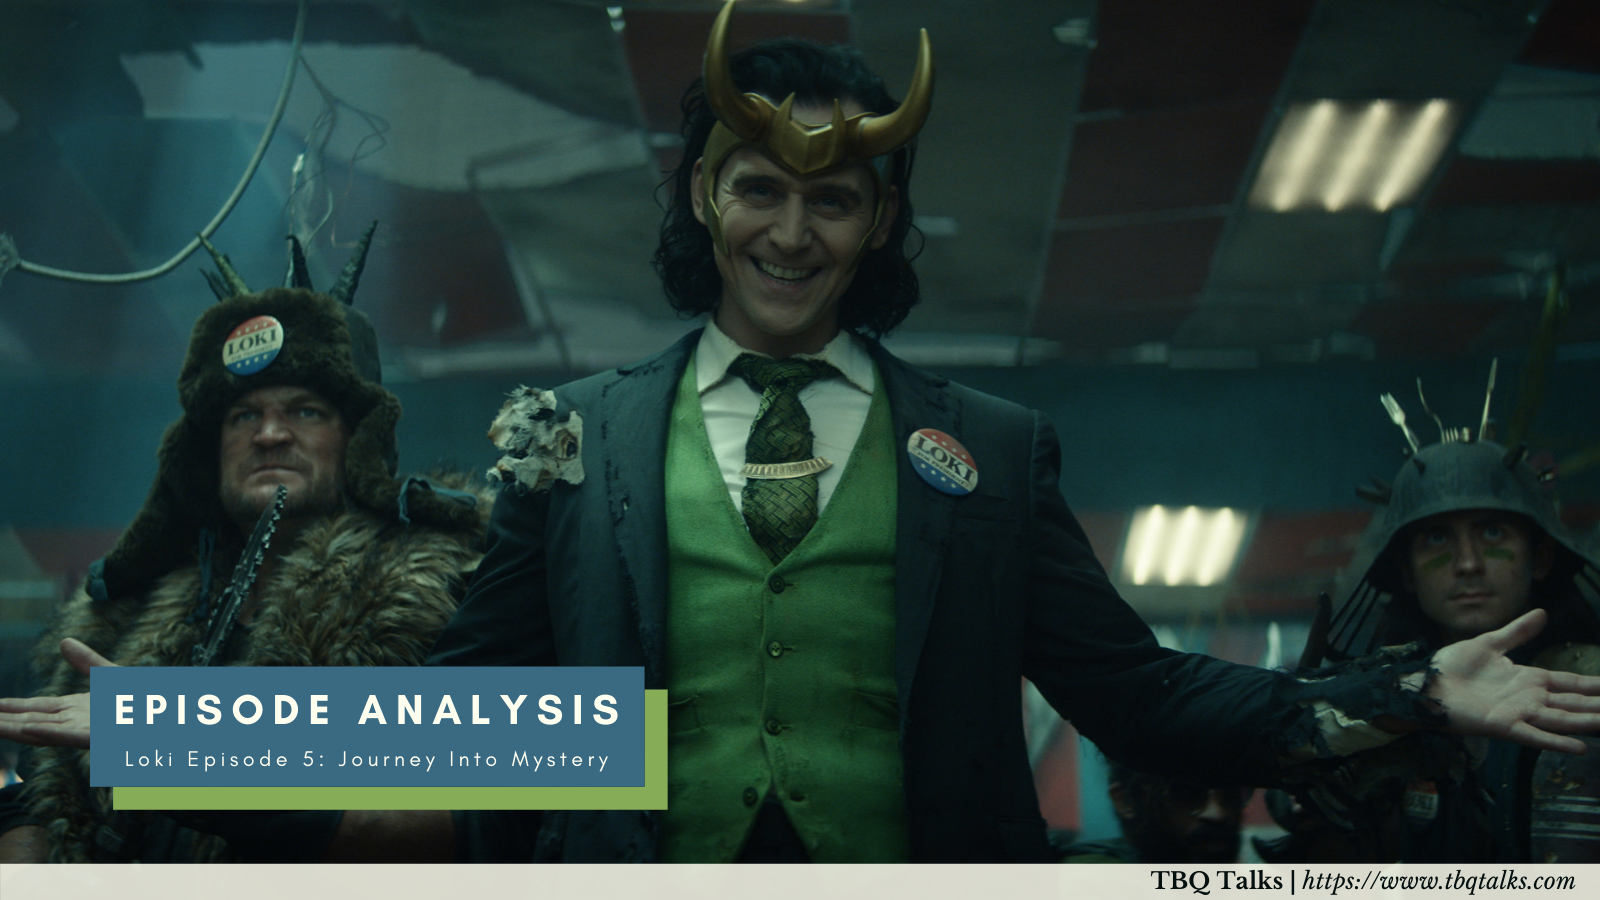 Episode Analysis Loki Episode 5: Journey Into Mystery